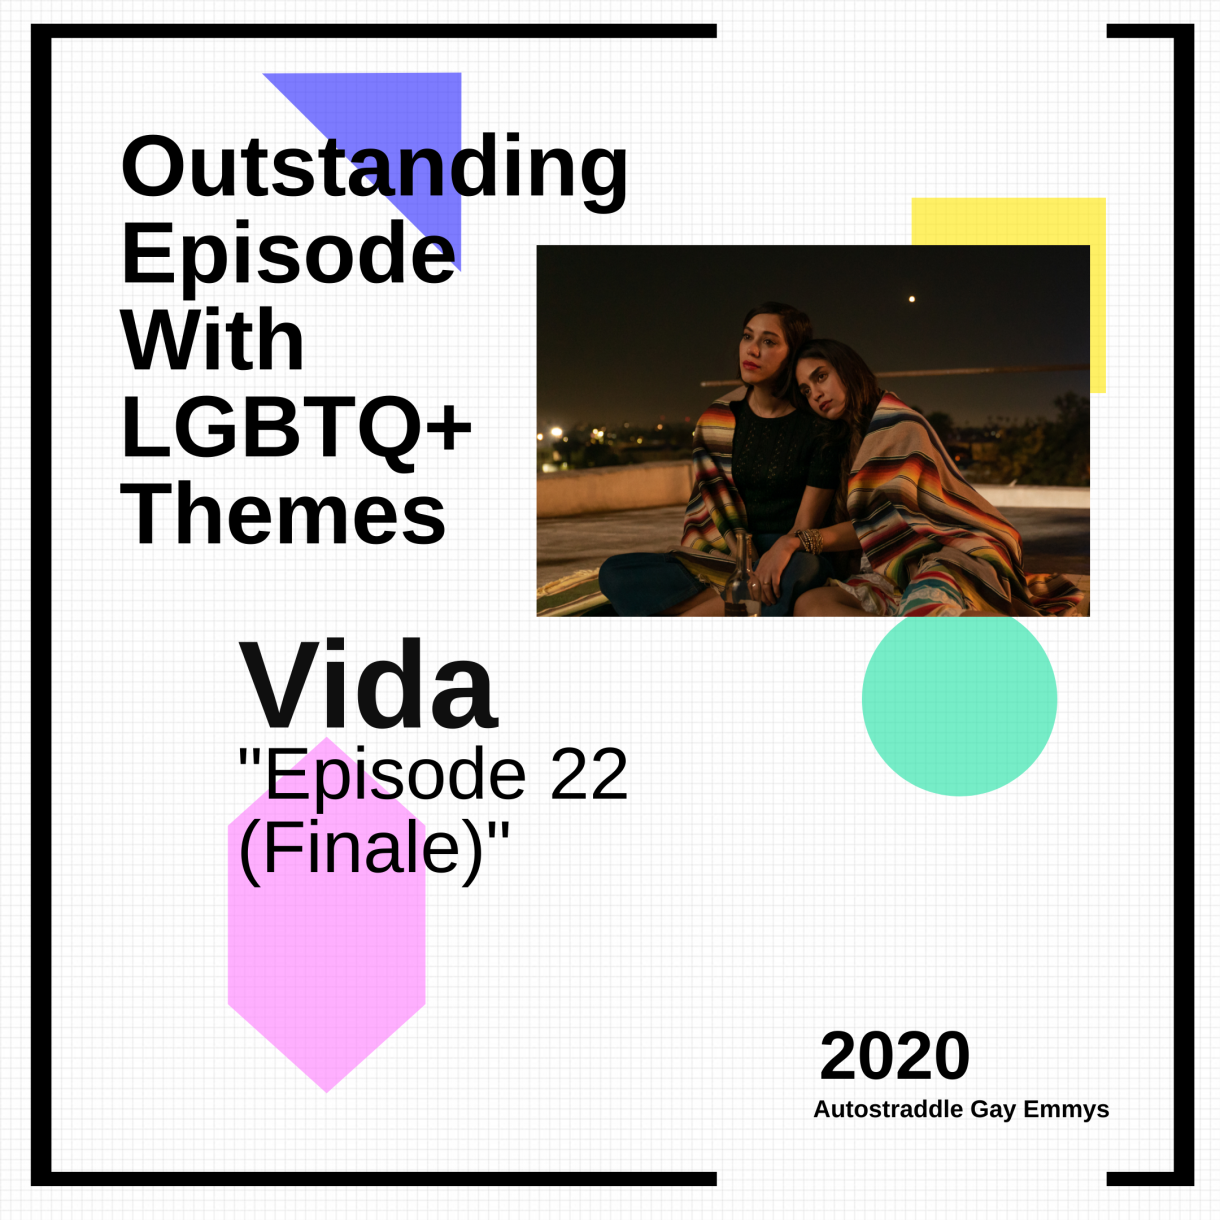 Best TV Episode With LGBTQ+ Themes: Vida S3E6 “Episode 22” (Finale)